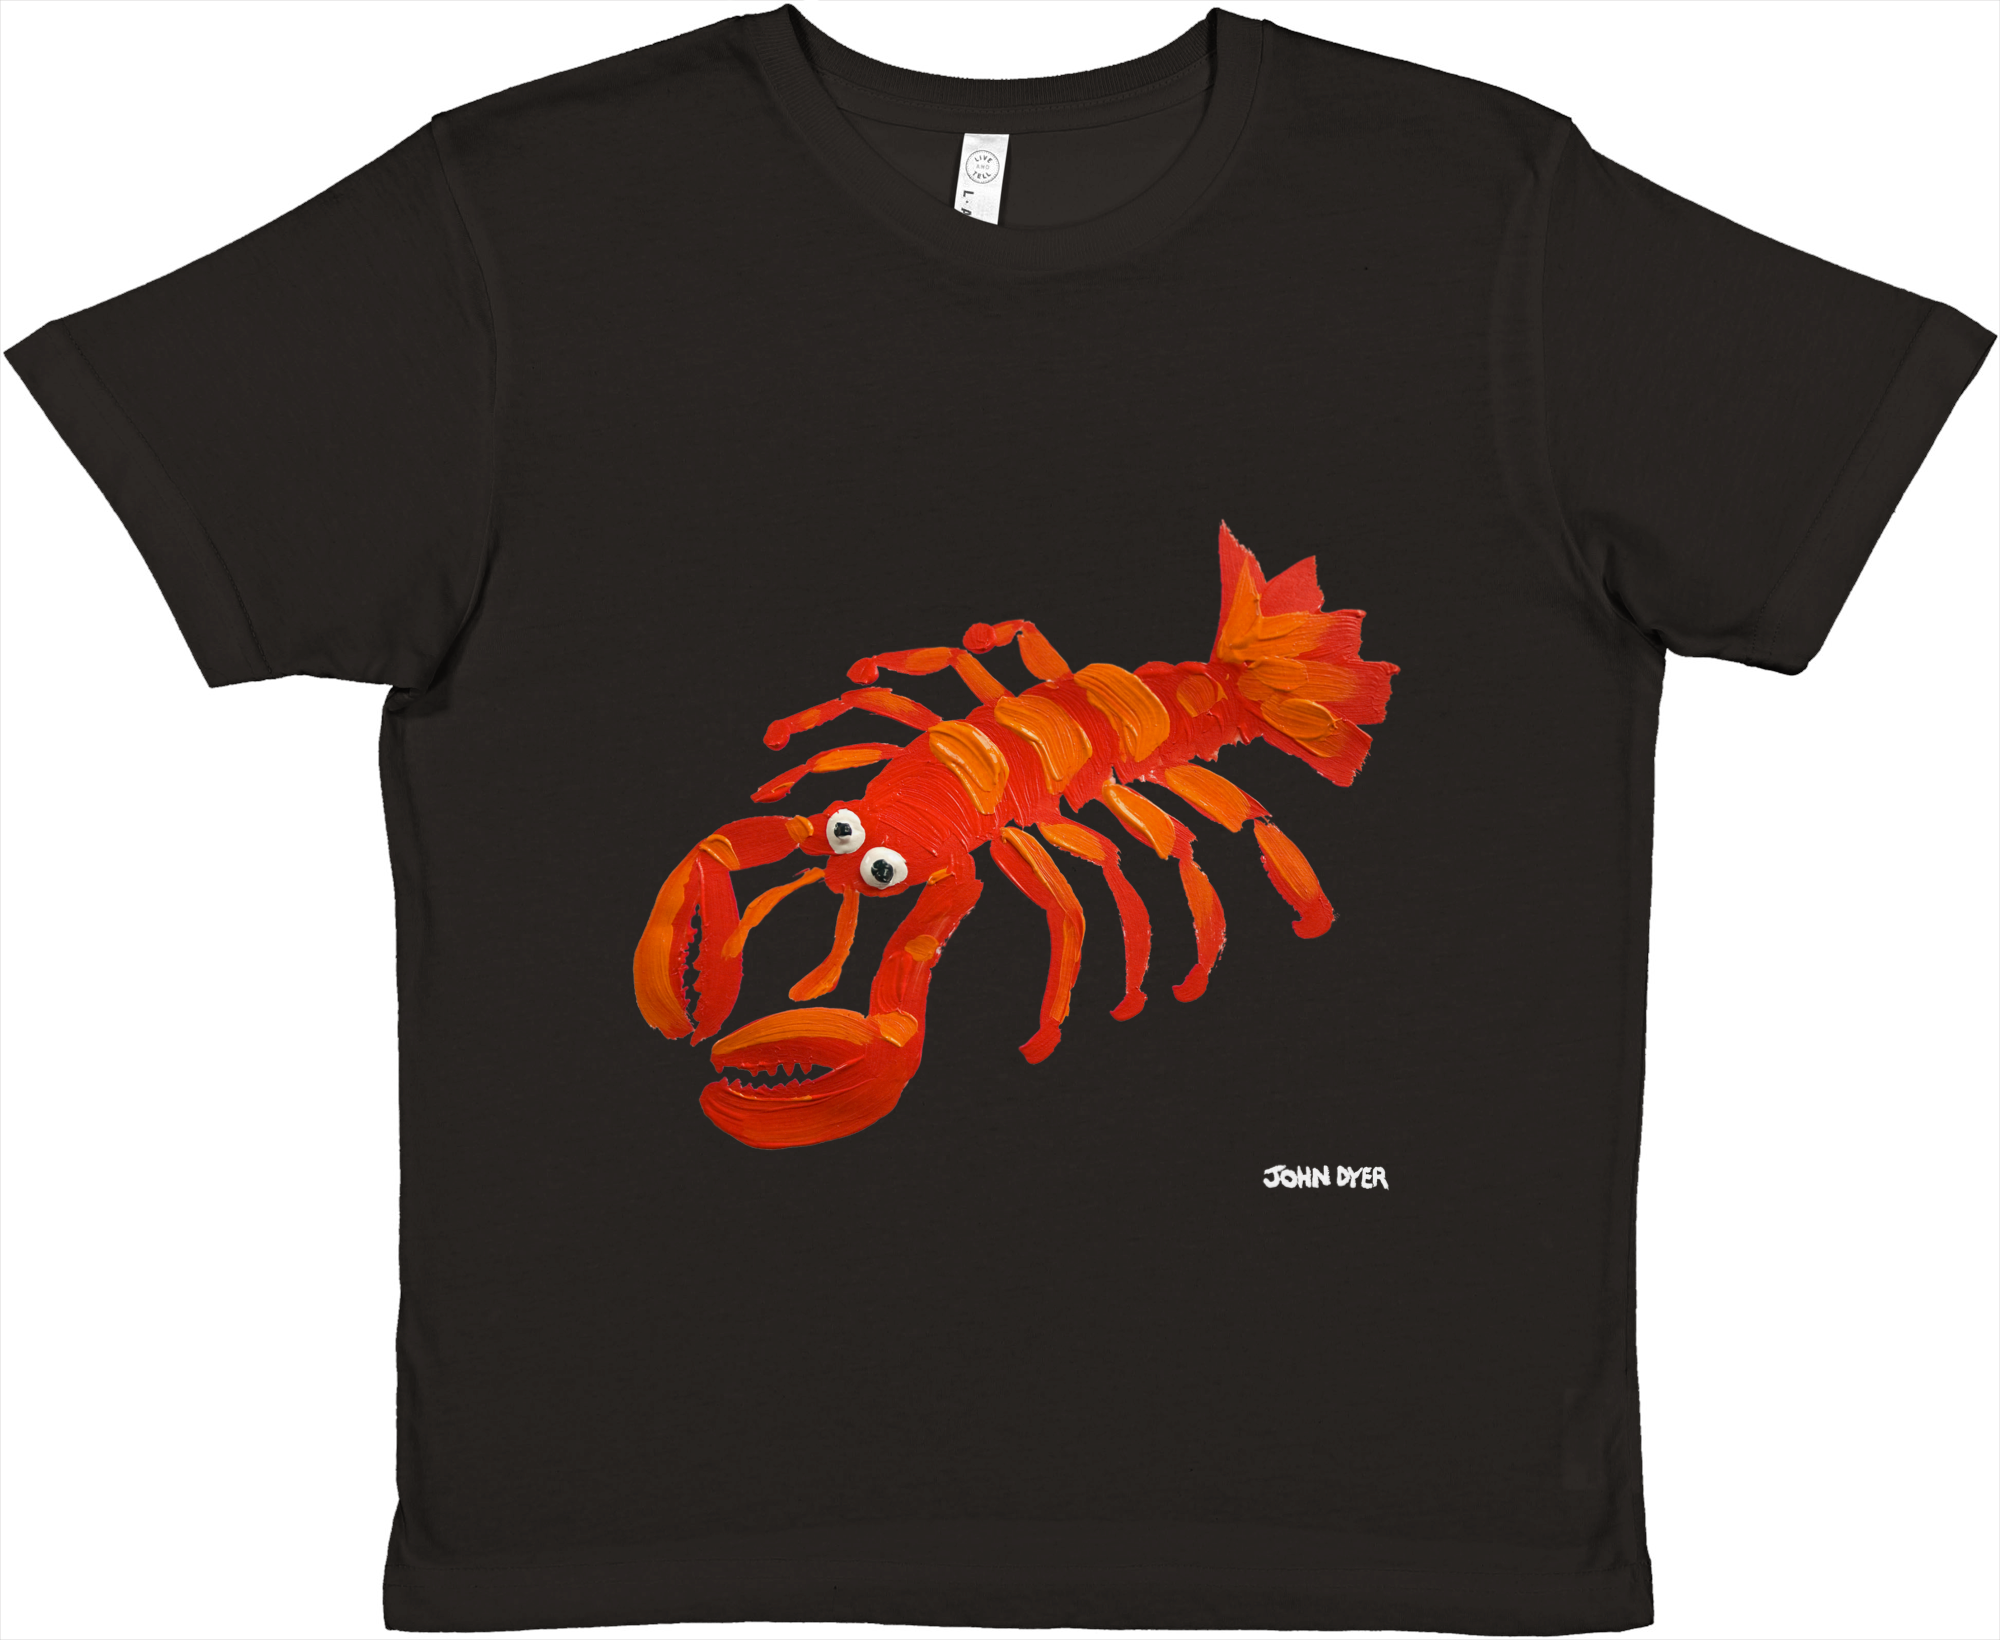 Cornish Lobster kids art t-shirt by John Dyer